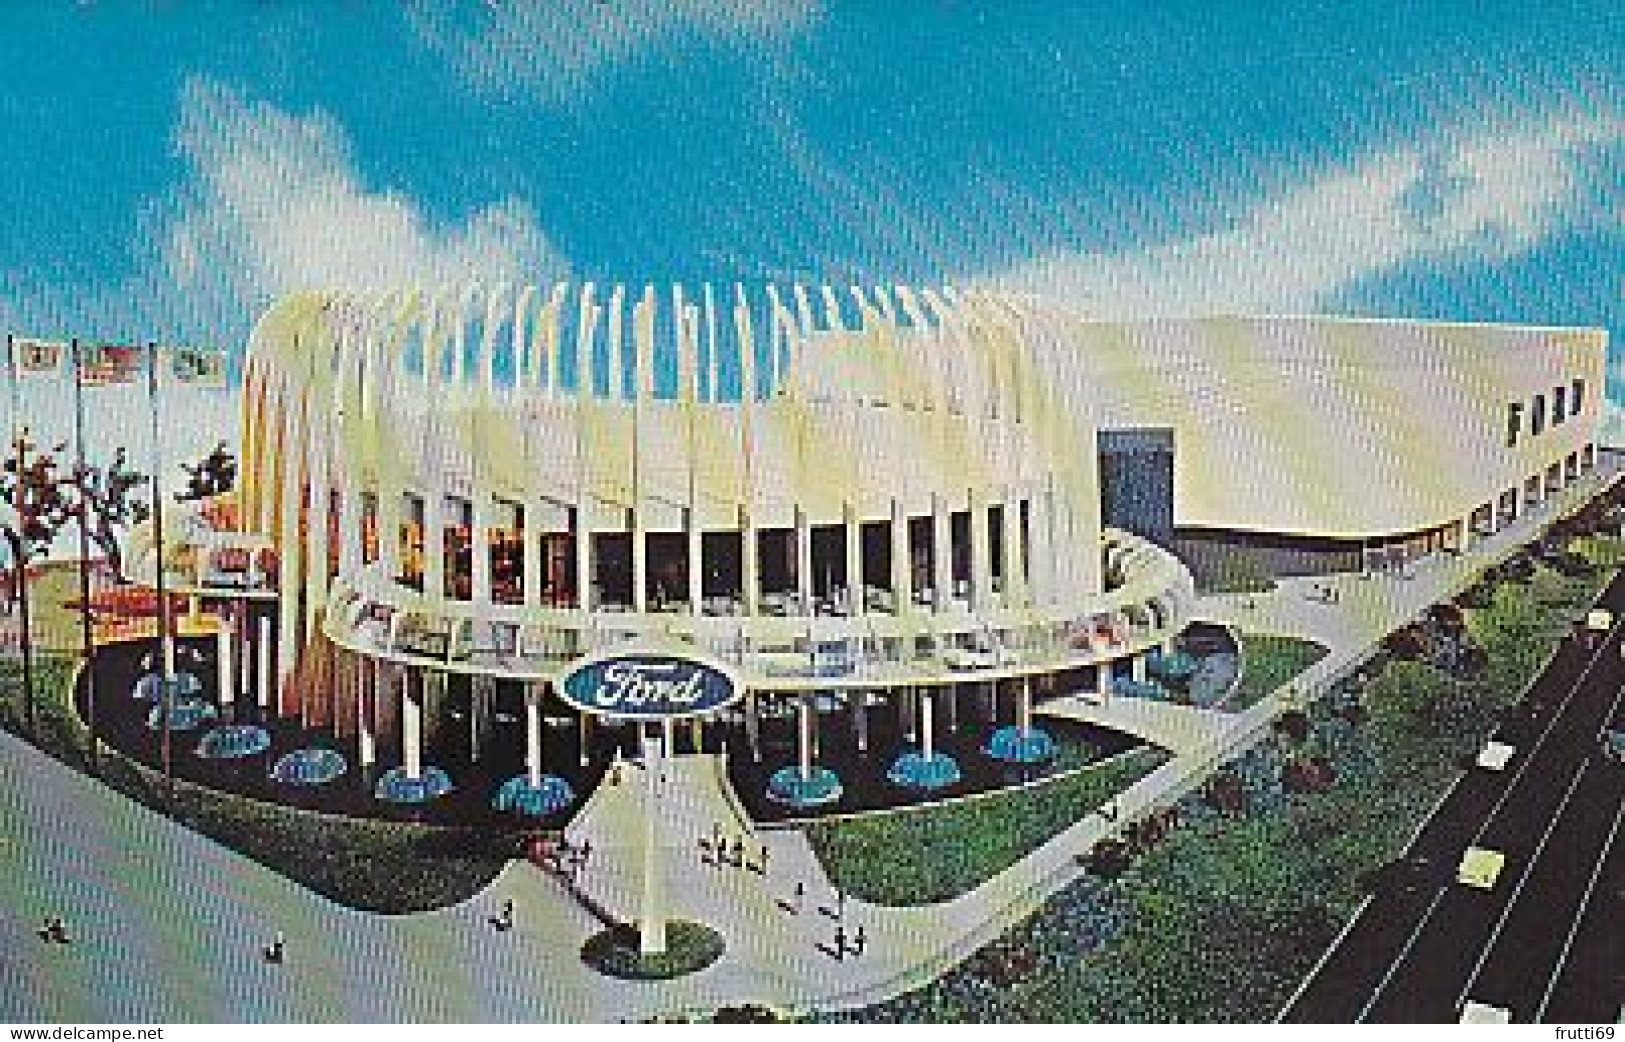 AK 215383 USA - New York World's Fair 1964-65 - Ford Motor Company Pavilion - Expositions